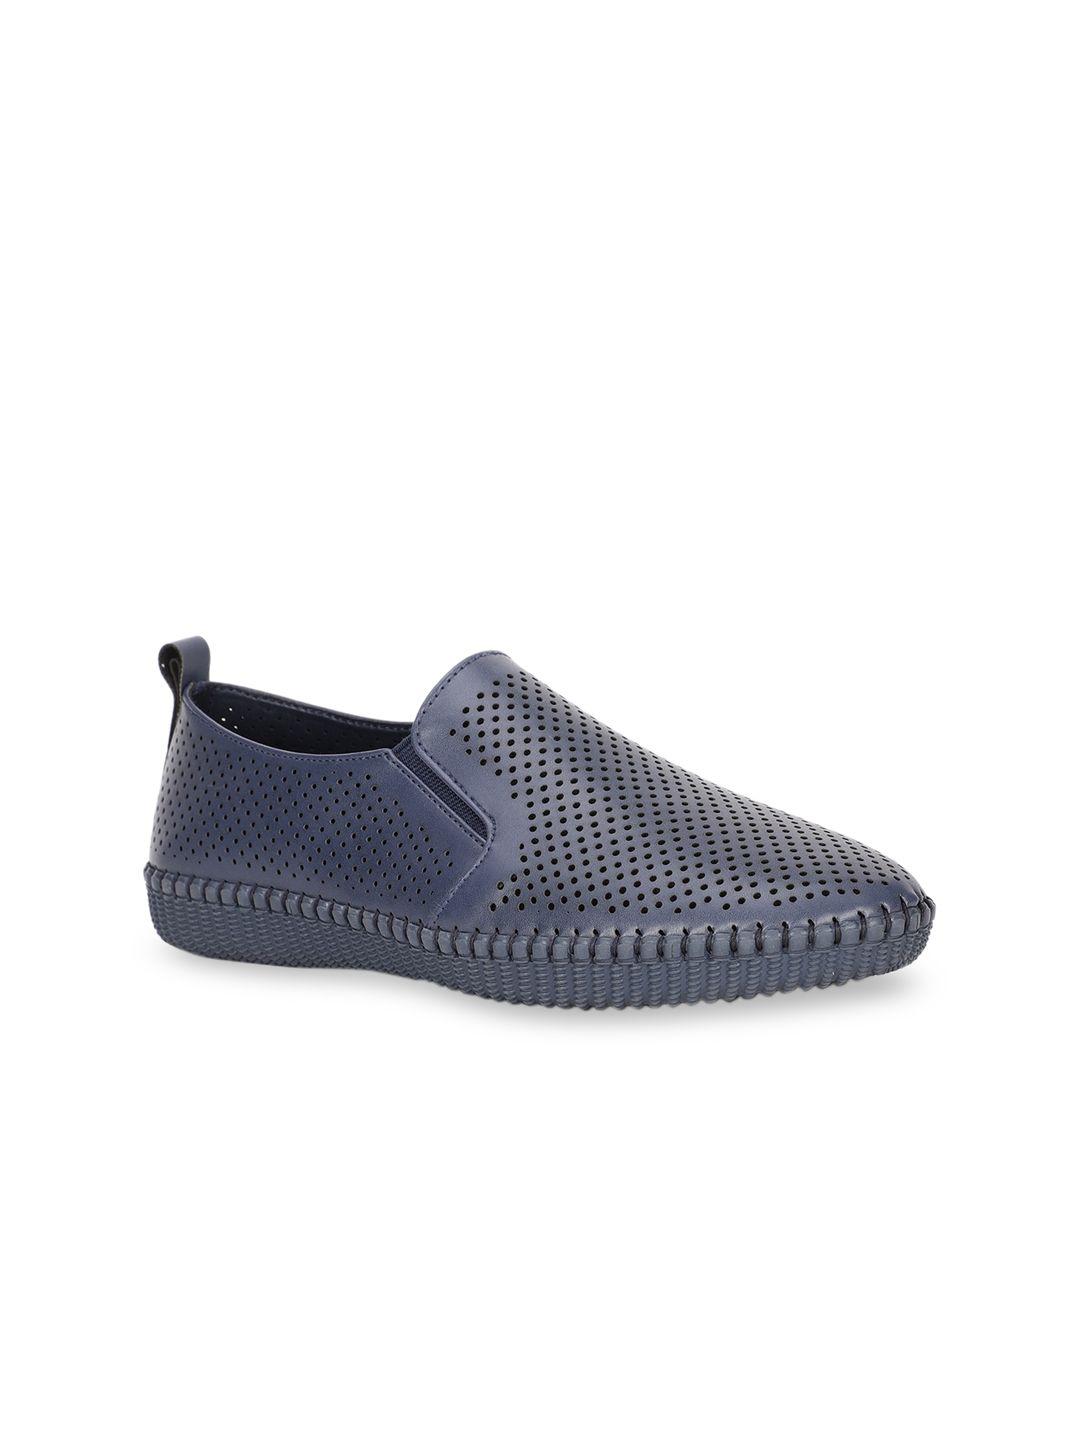 bruno manetti women navy blue textured slip-on sneakers